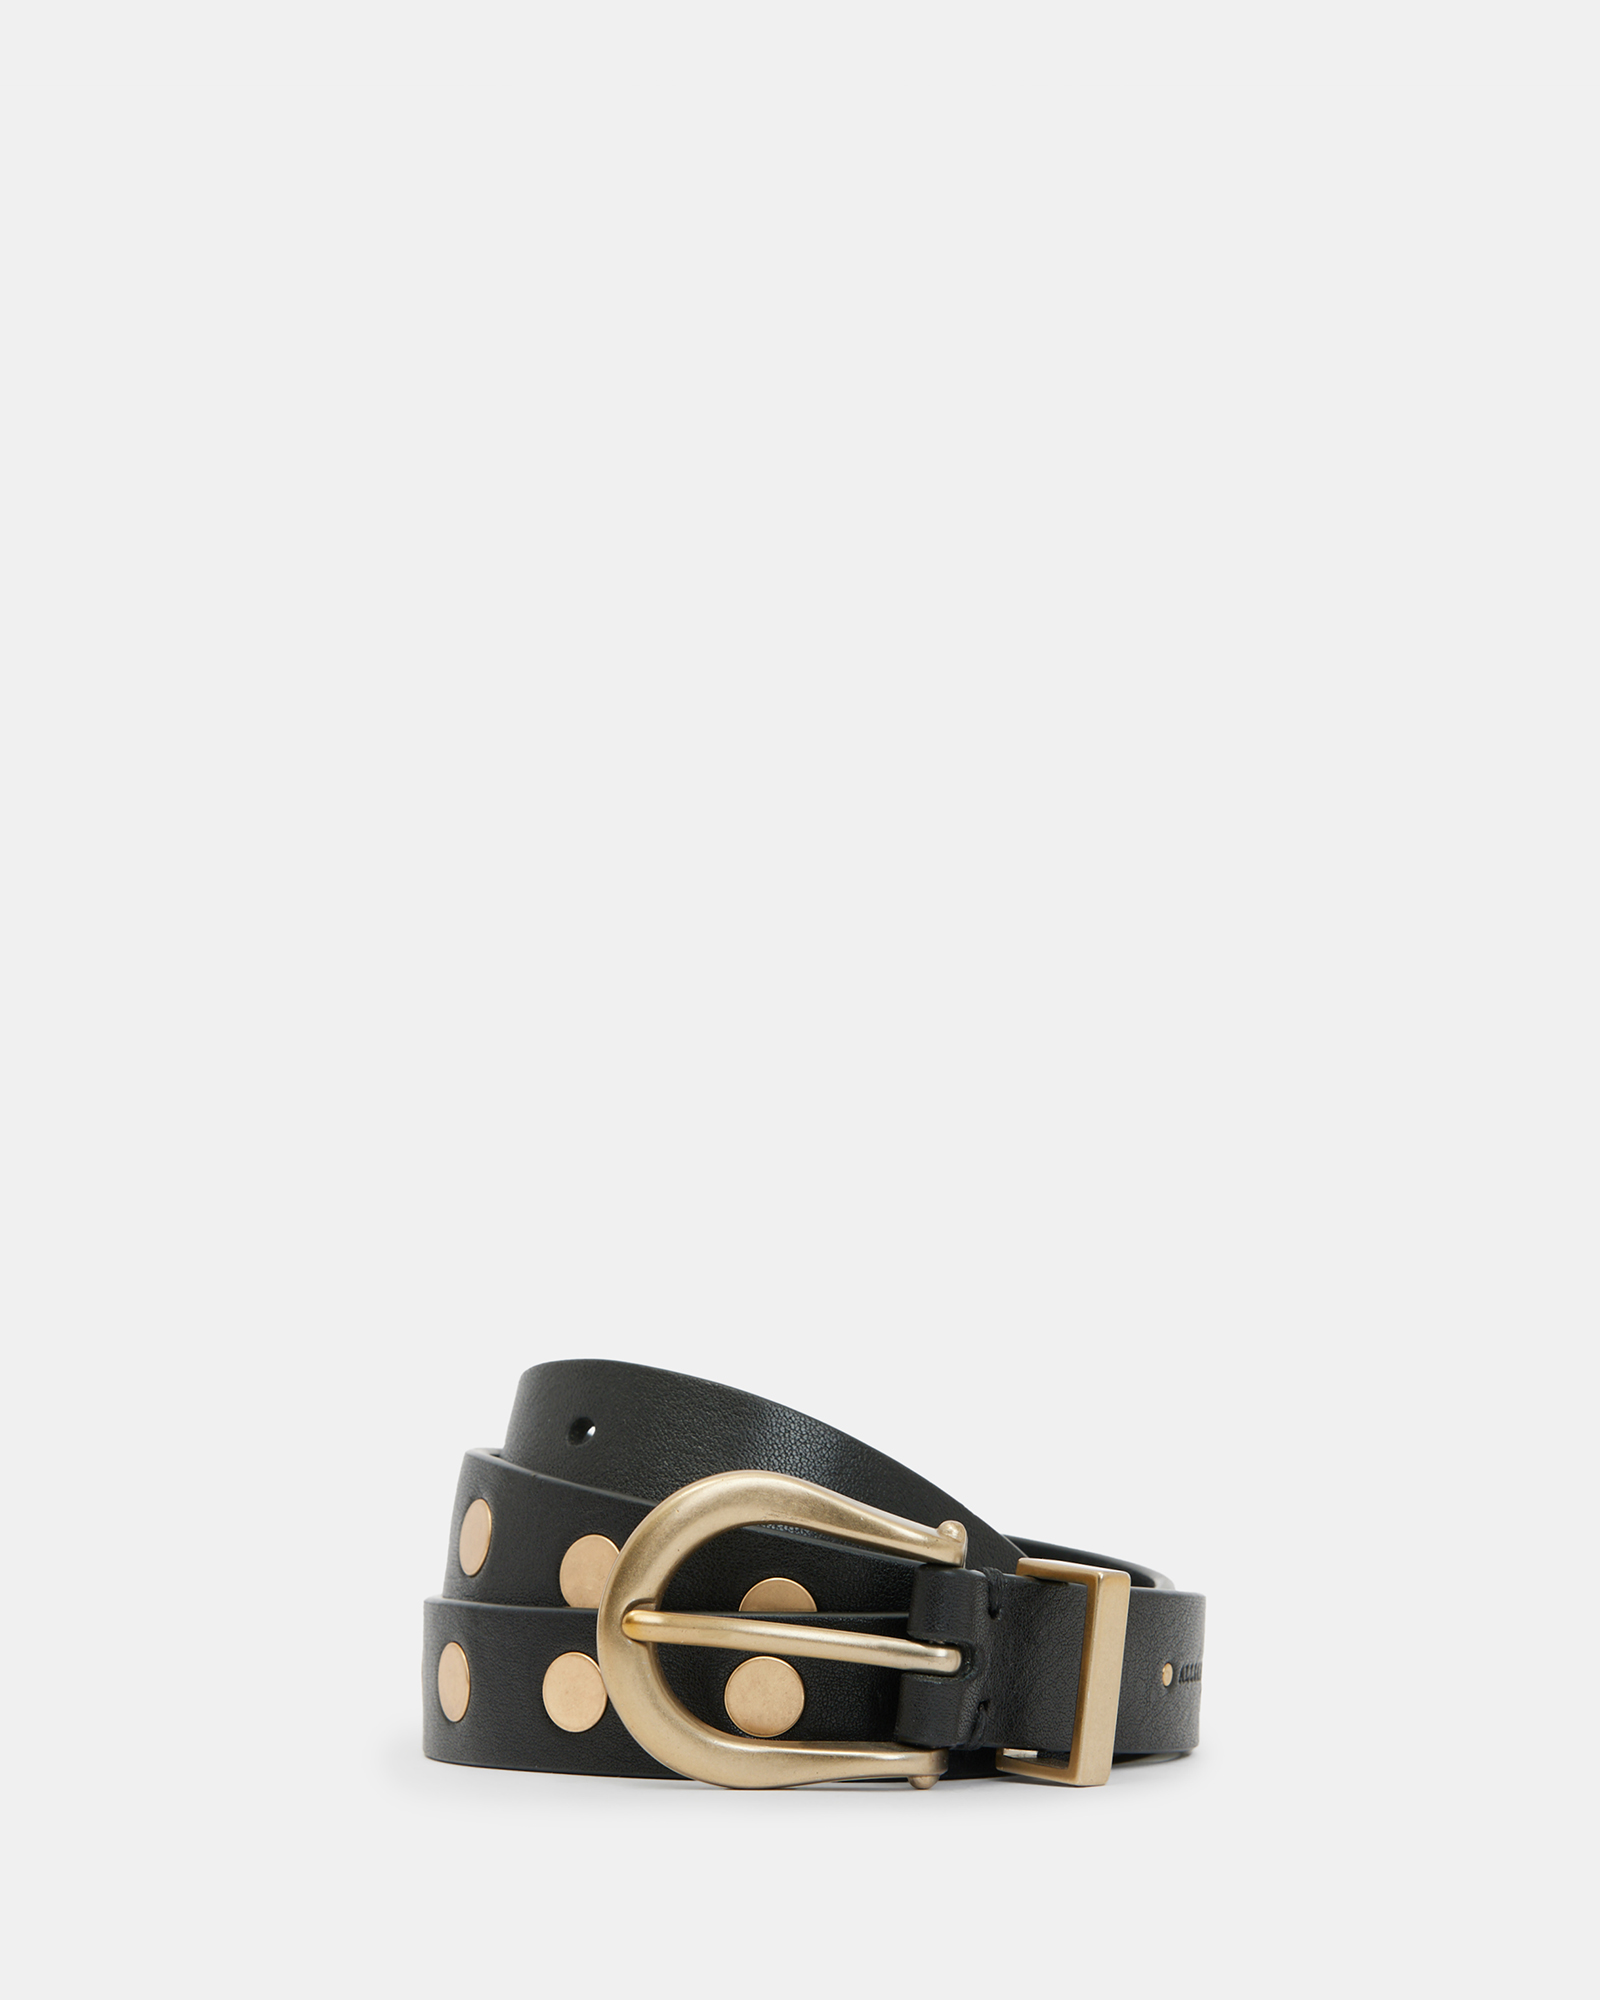 AllSaints Michaela Studded Leather Belt,, BLACK/WARM BRASS